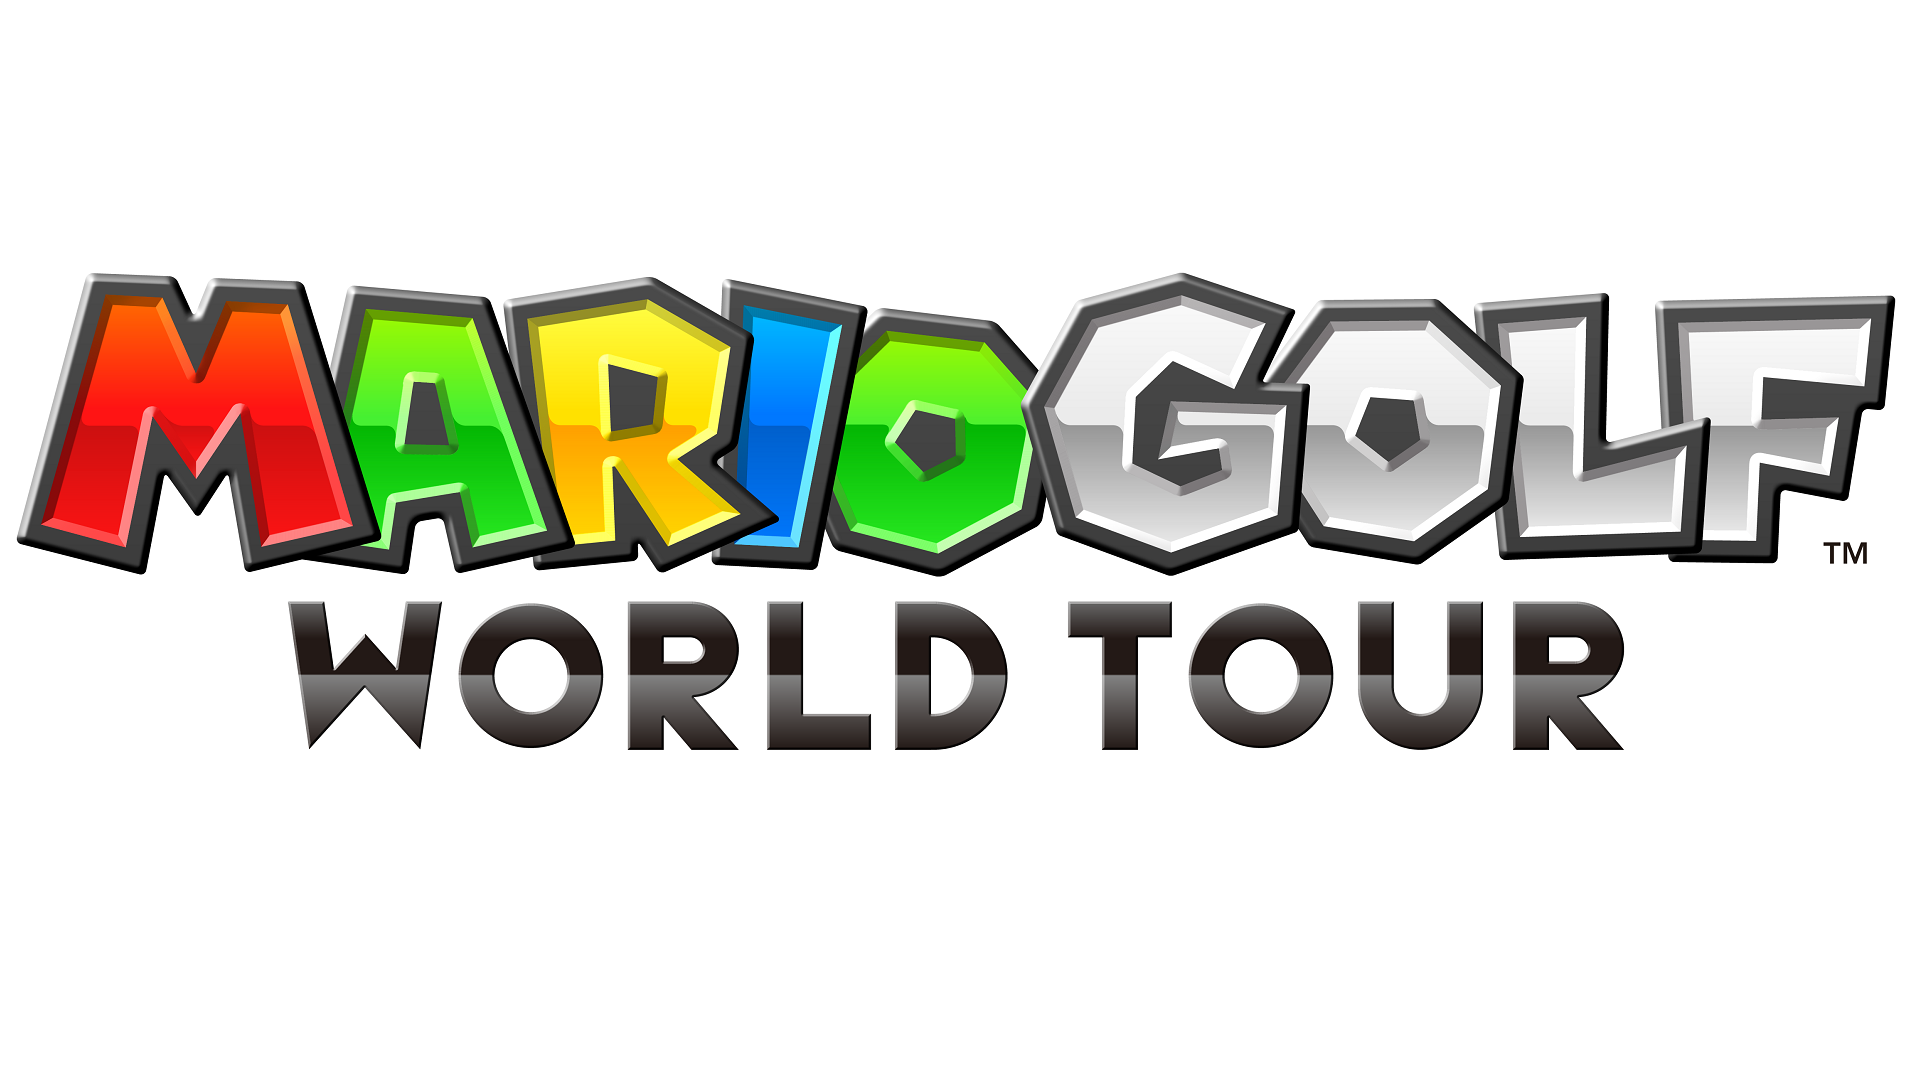 Mario Golf: World Tour Logo